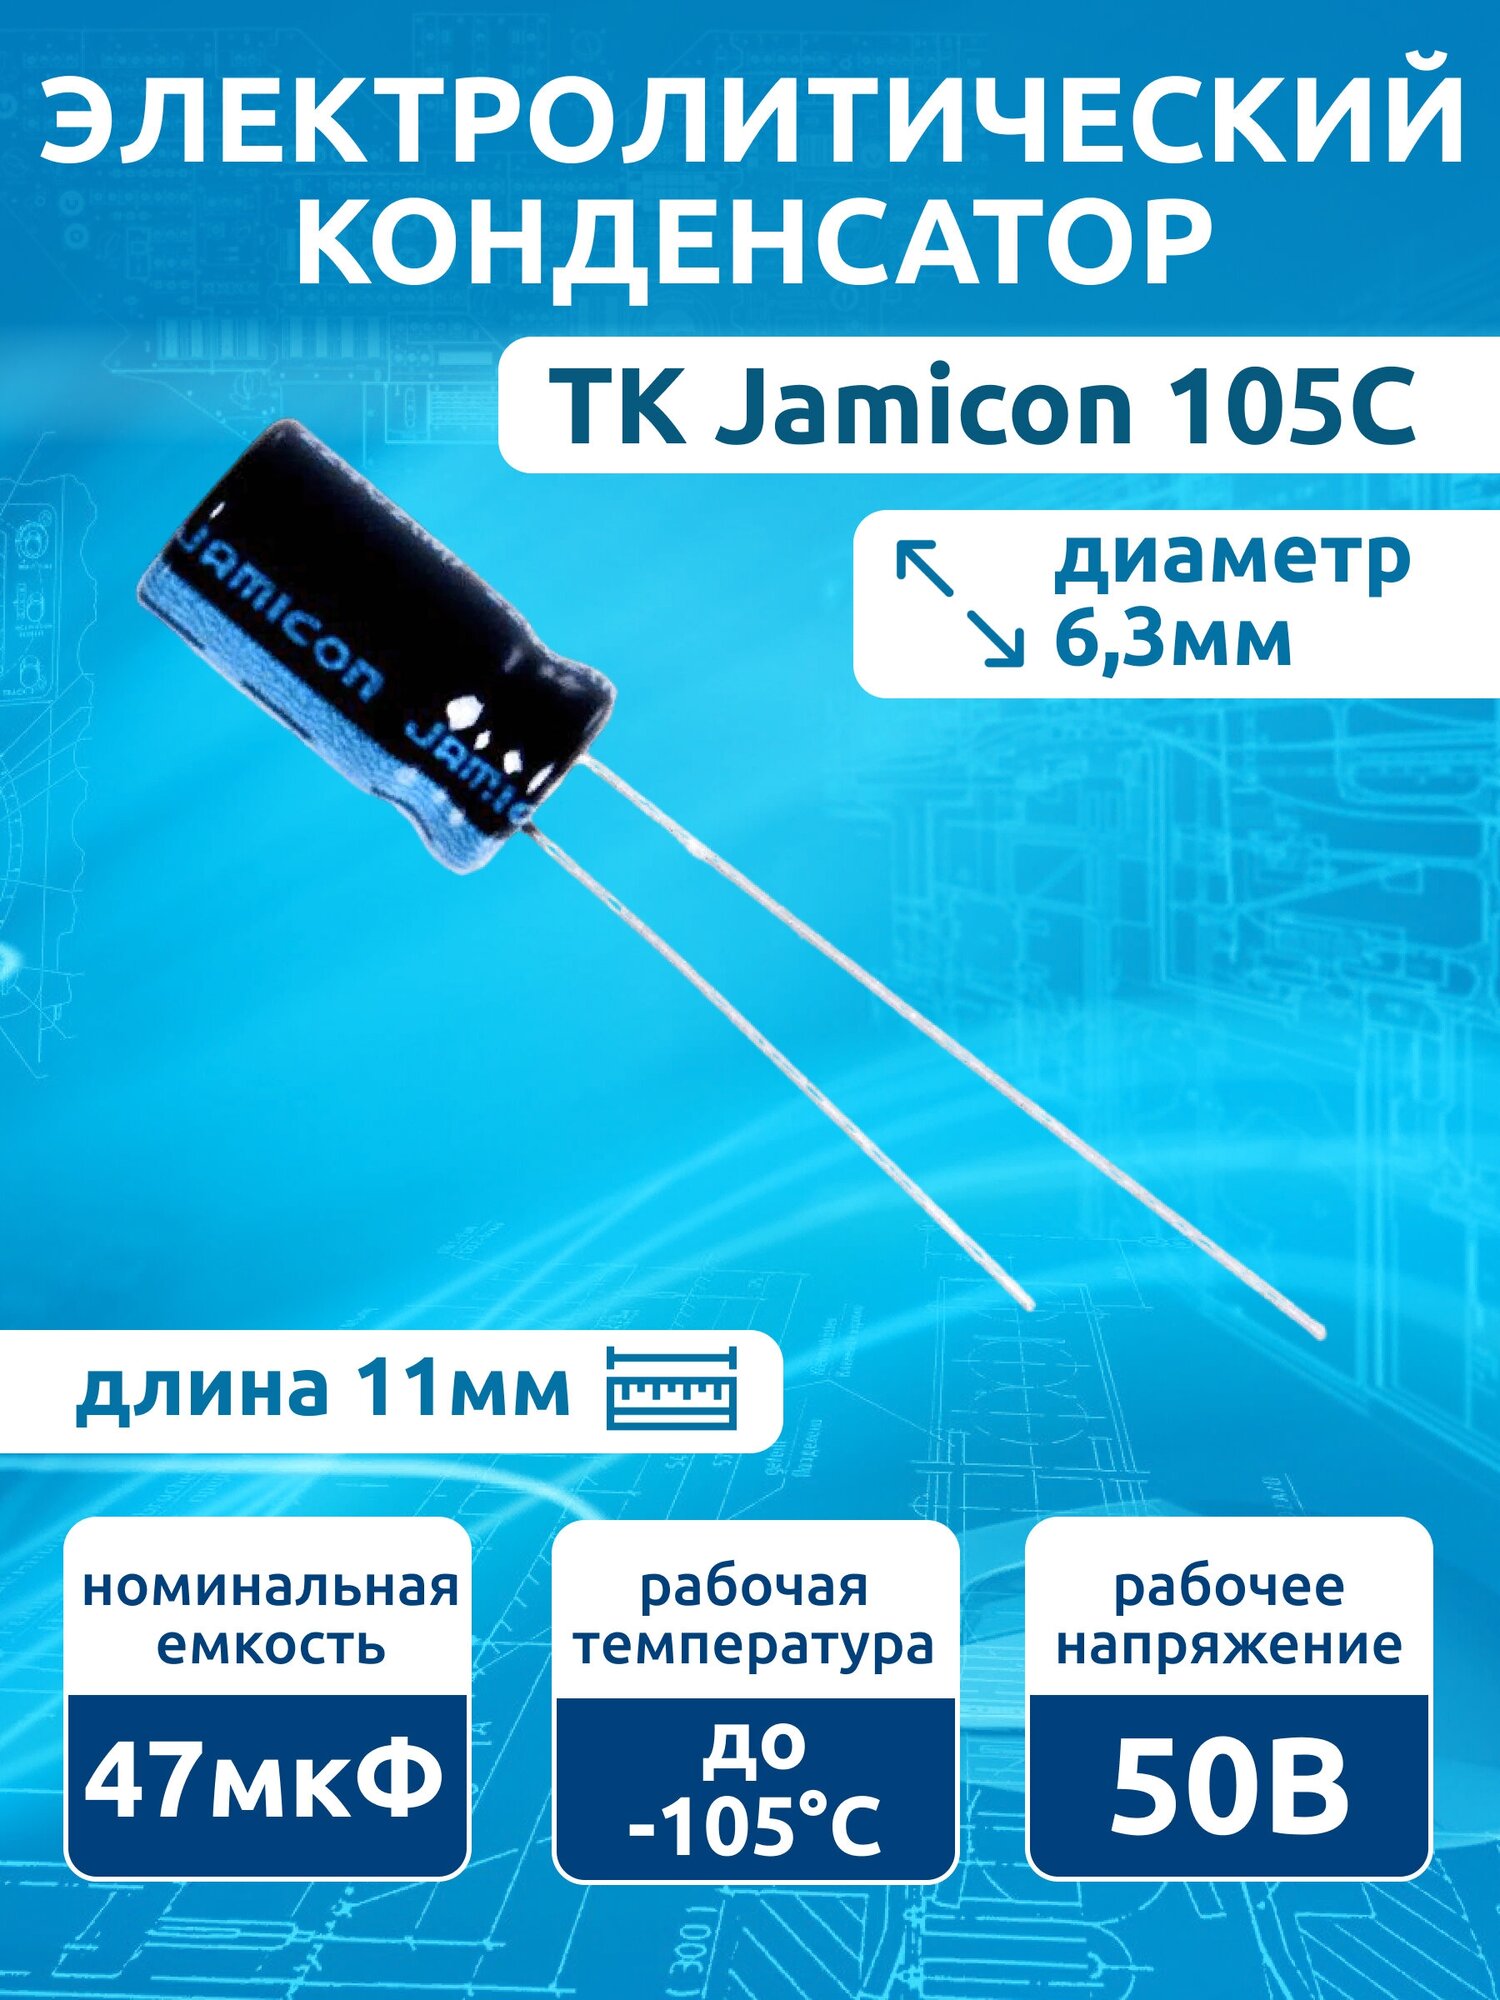 TKR470M1HE11M Конденсатор электролитический 47x50 (6,3x11) TK Jamicon 105C